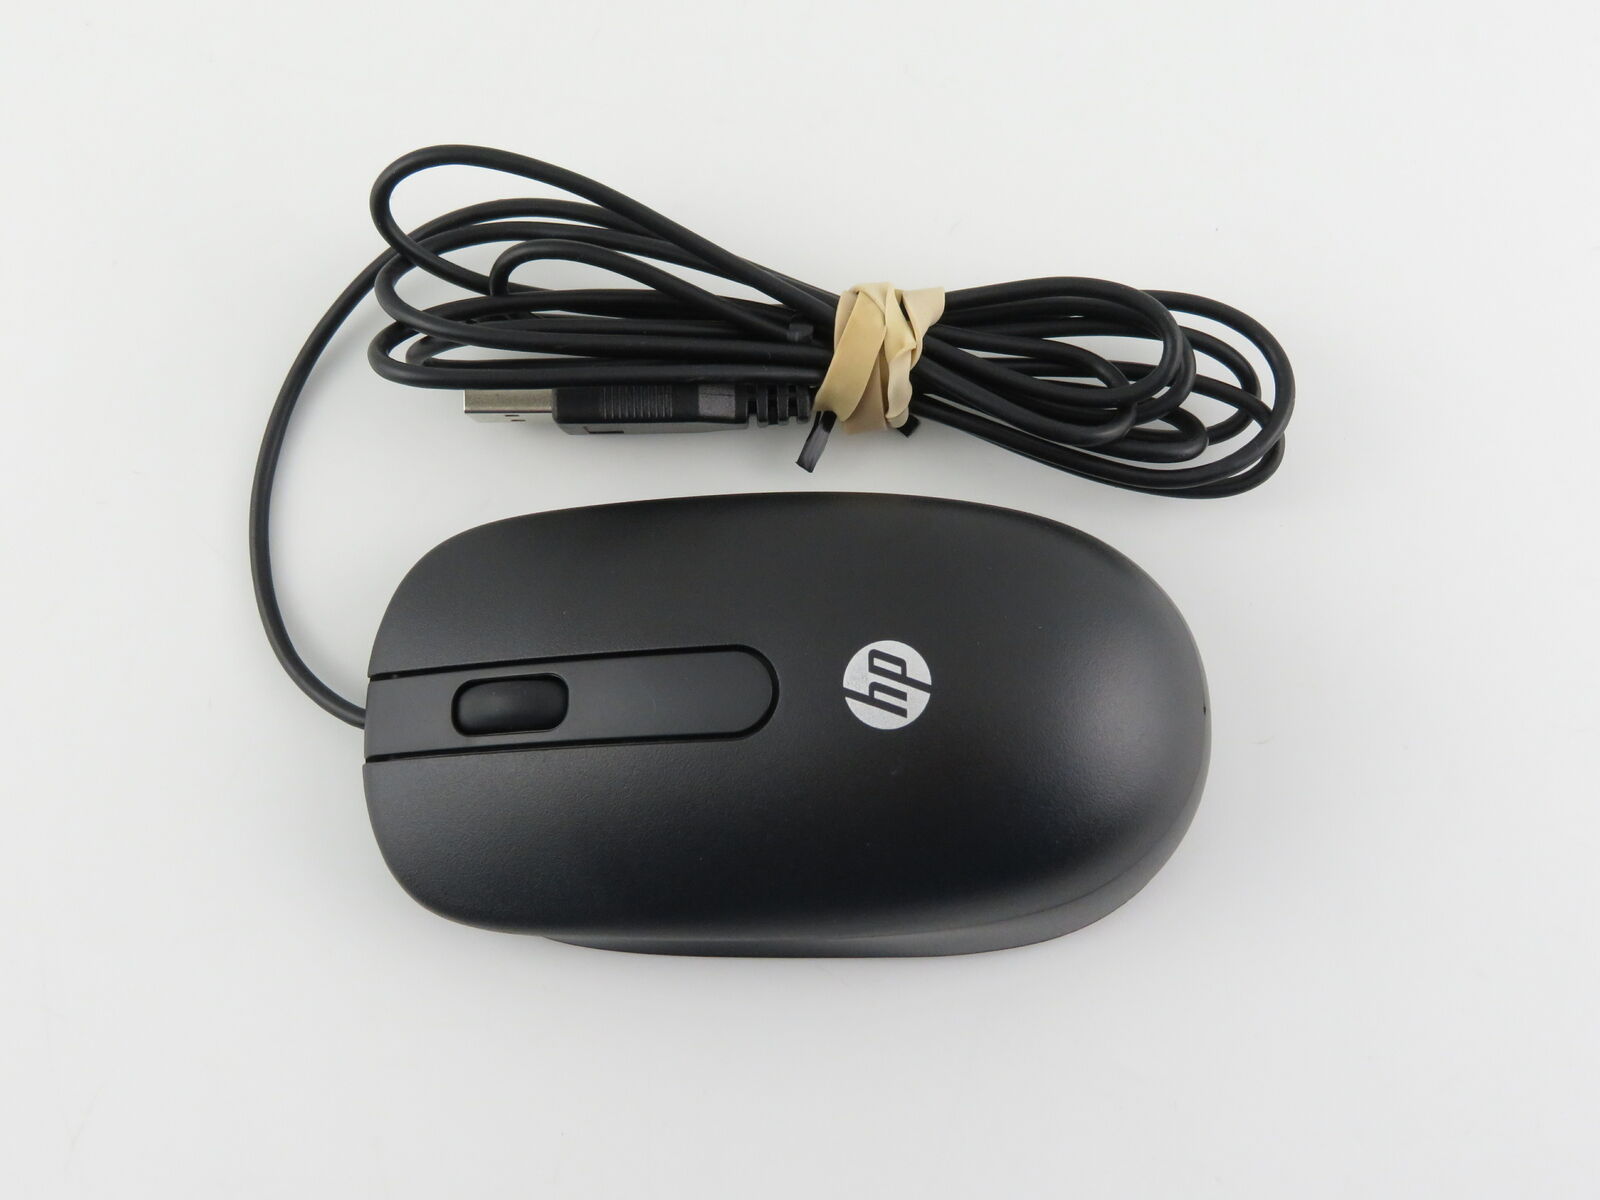 827866-001 / 827577-001 HP USB hardened mouse